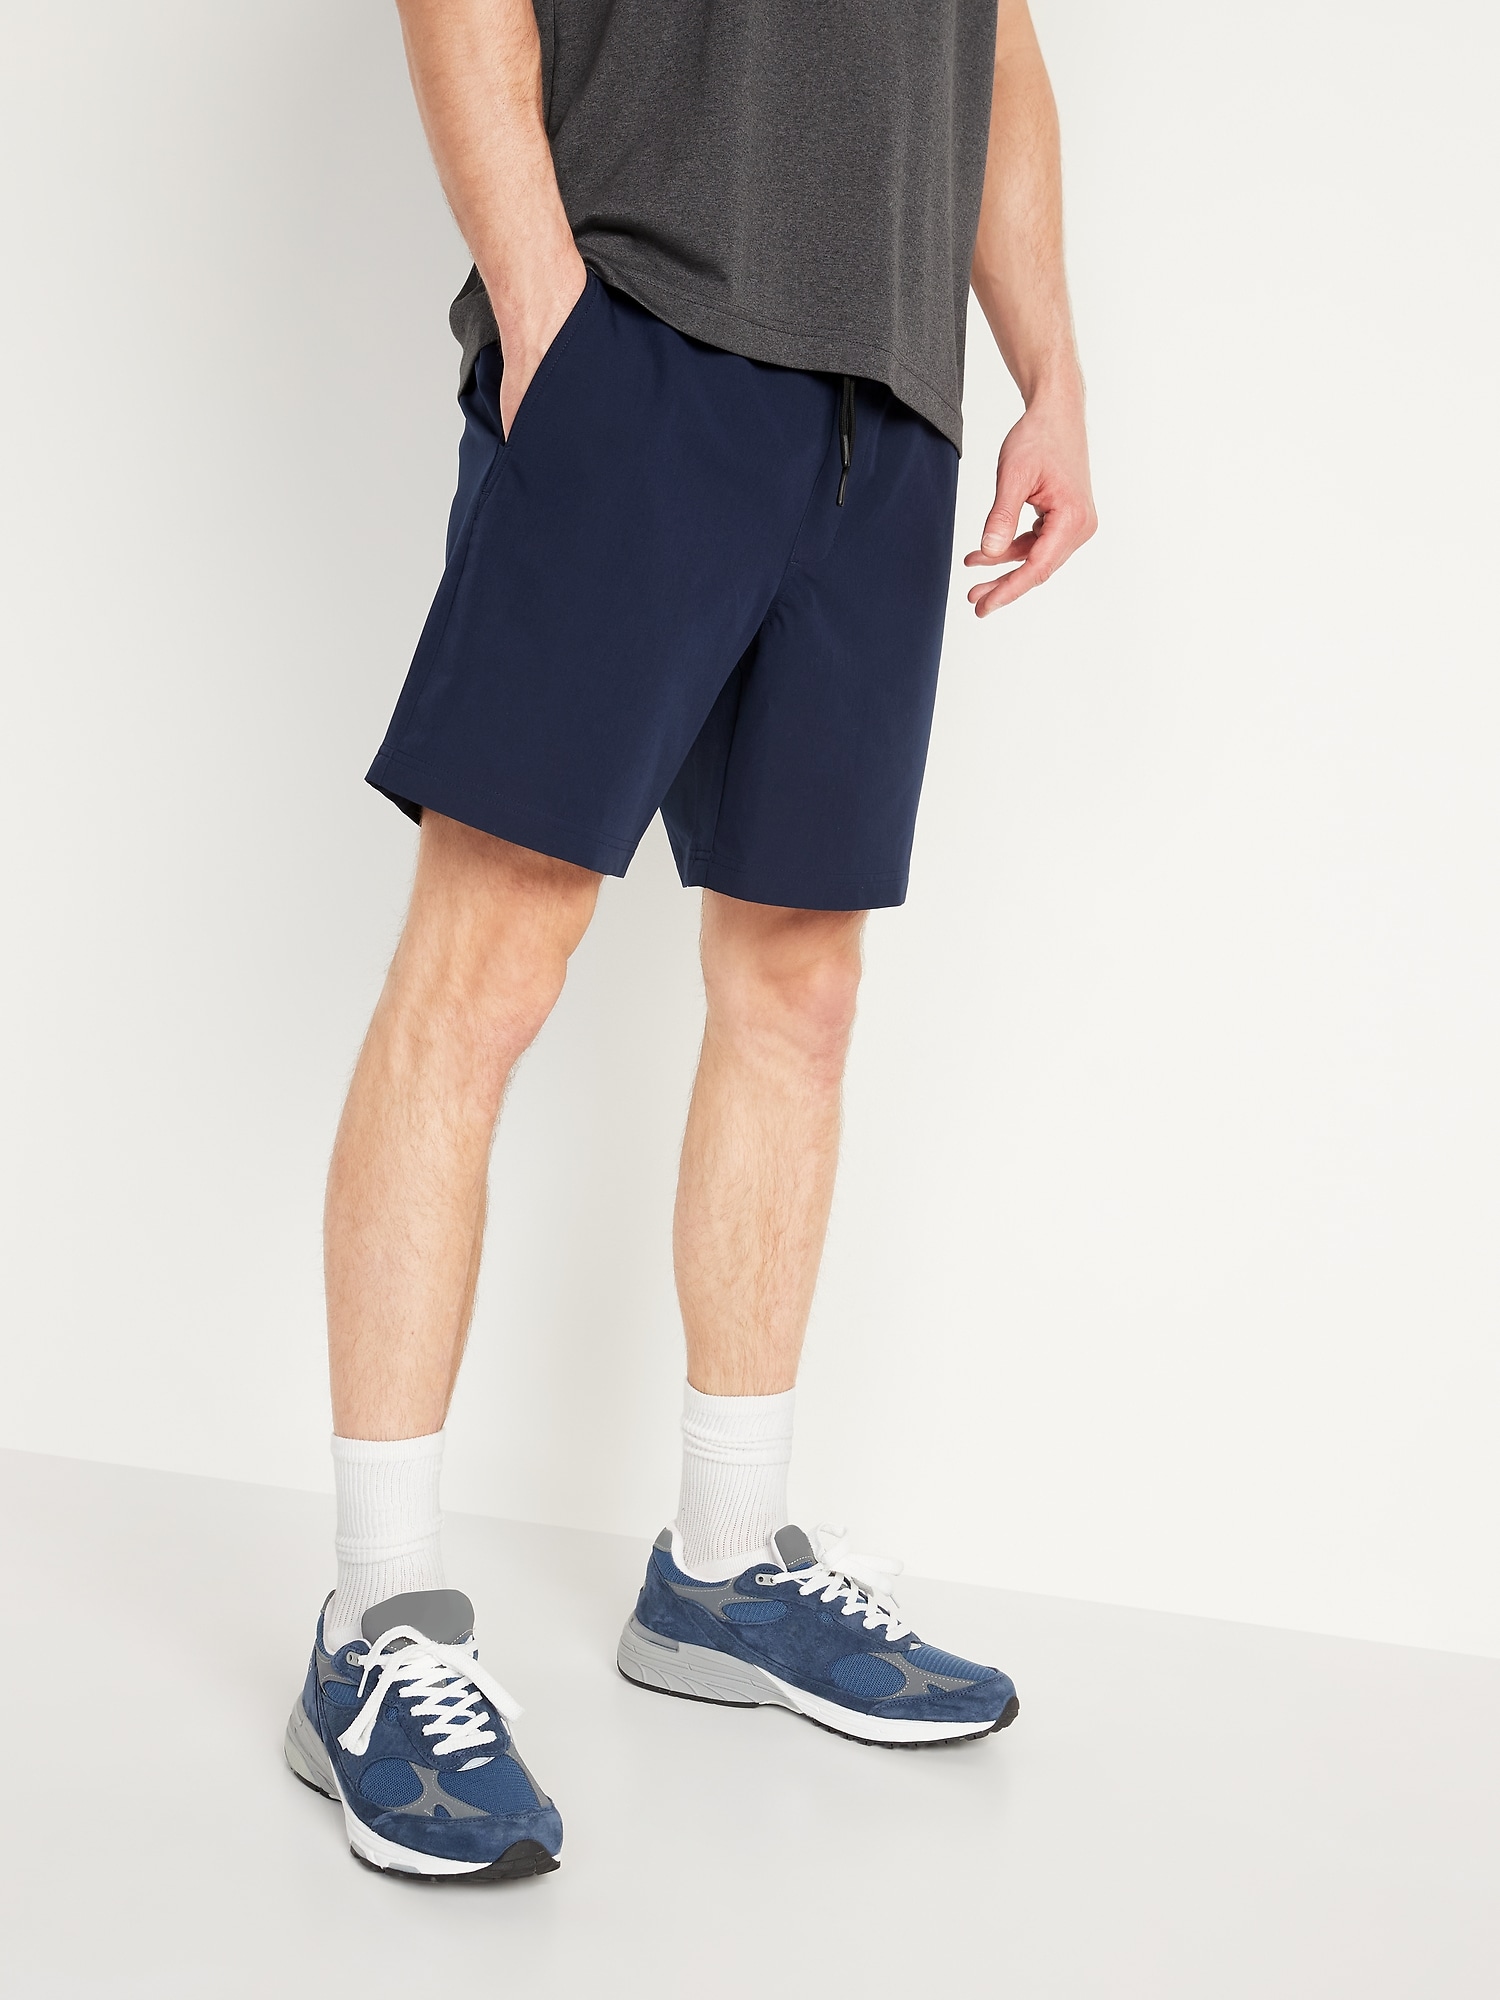 Solid Board Shorts -- 6-inch inseam